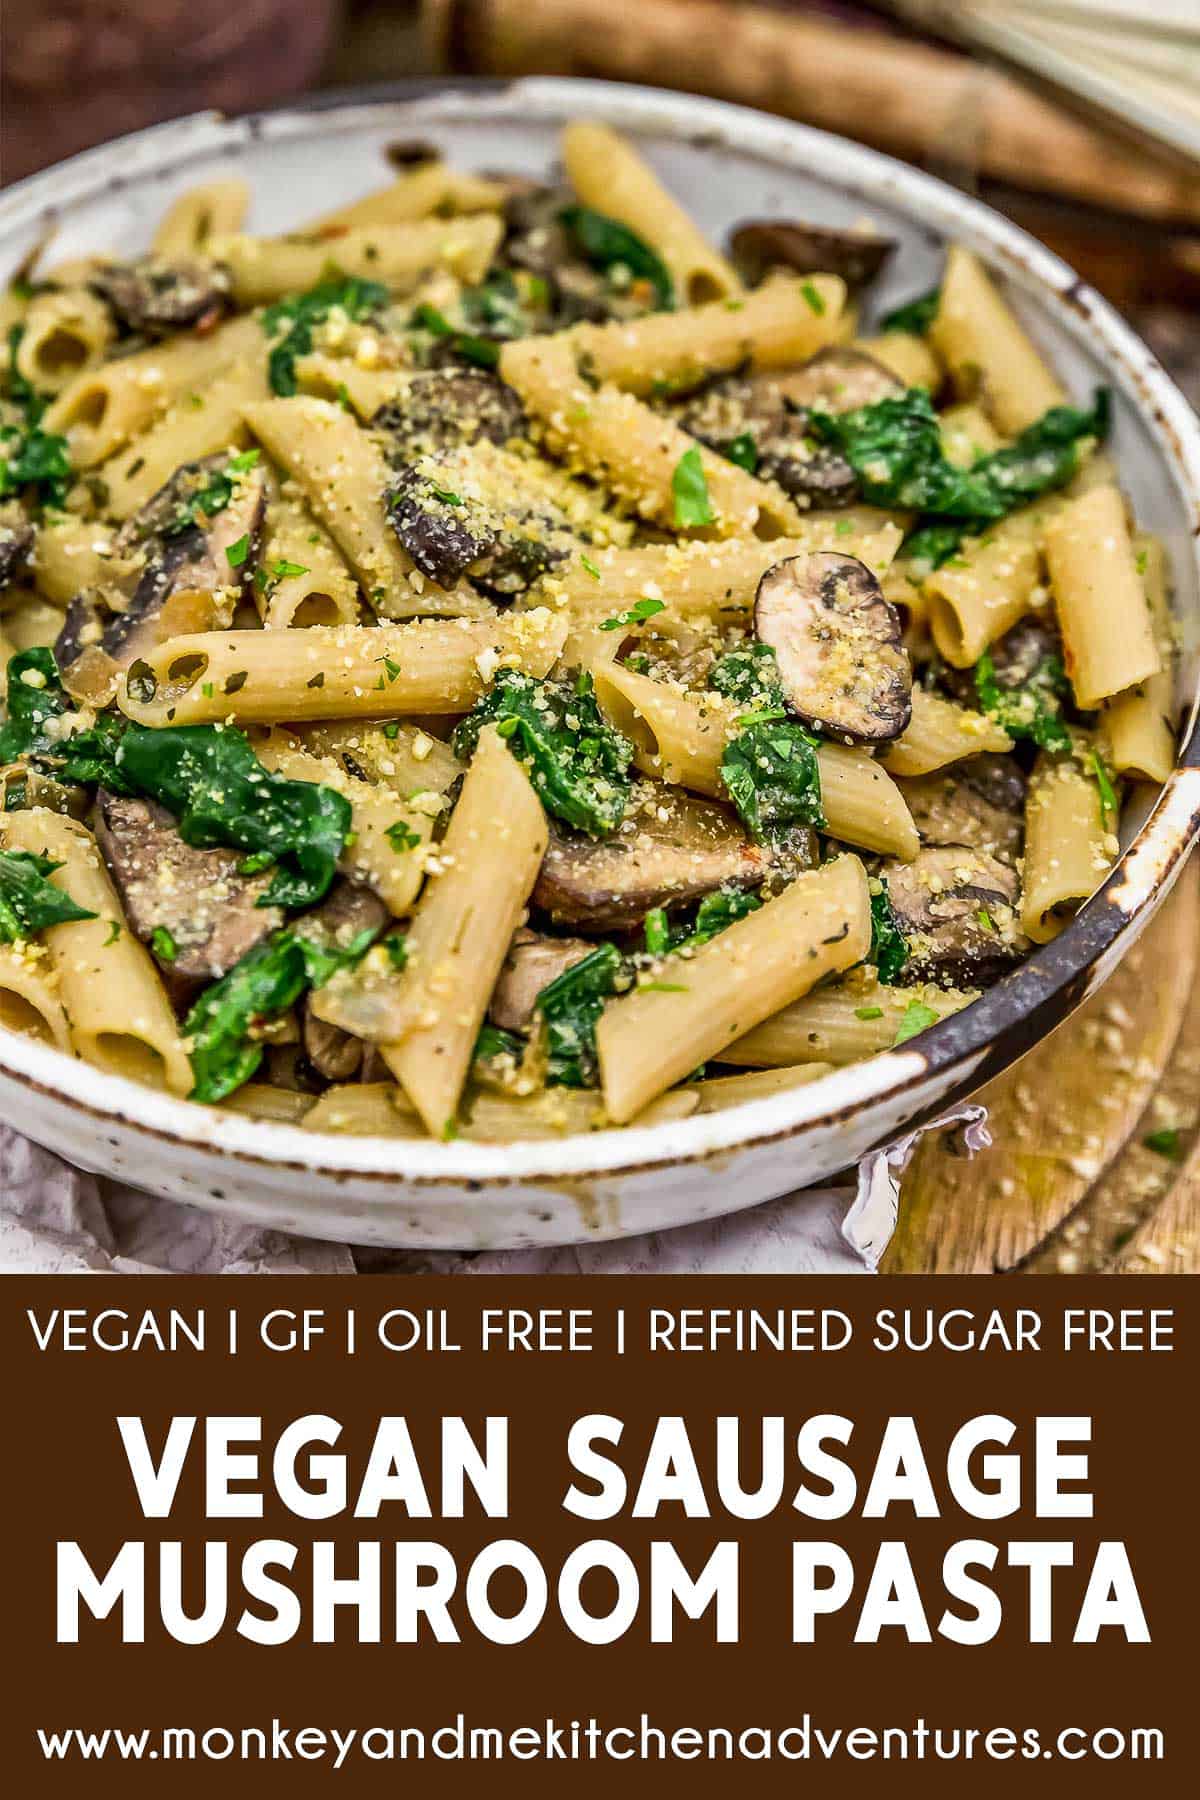 Vegan “Sausage” Mushroom Pasta with text description